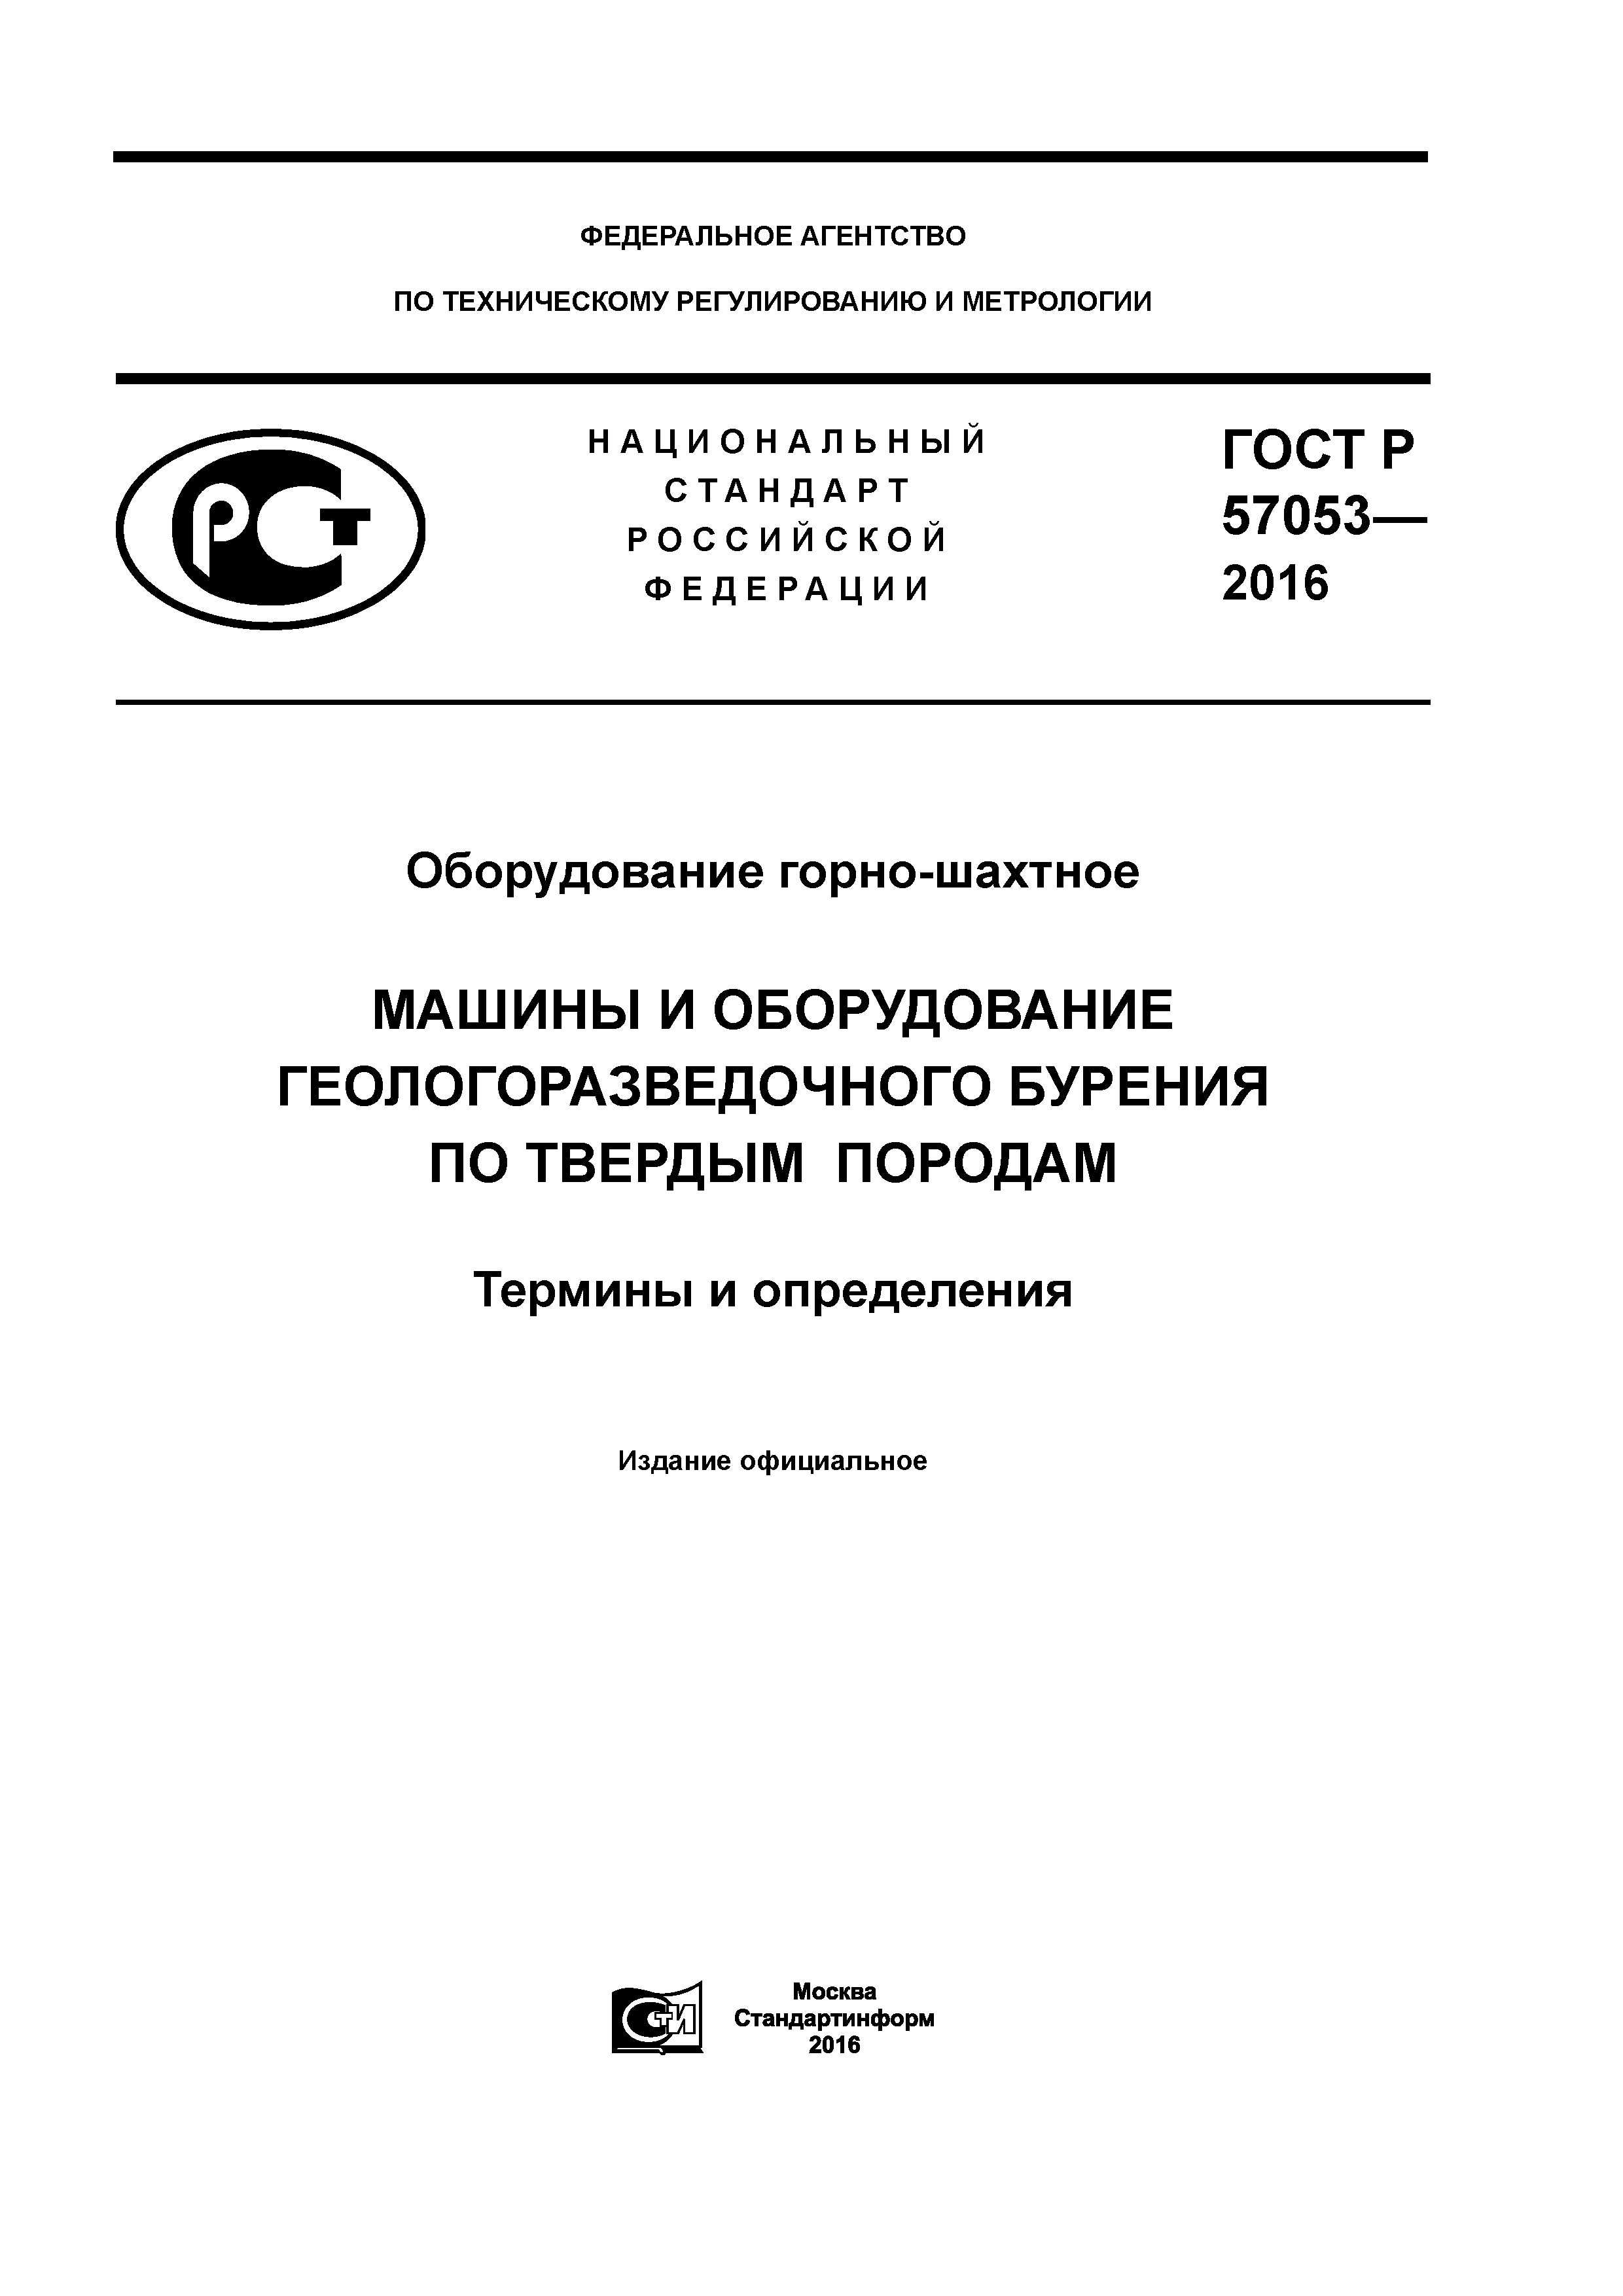 ГОСТ Р 57053-2016